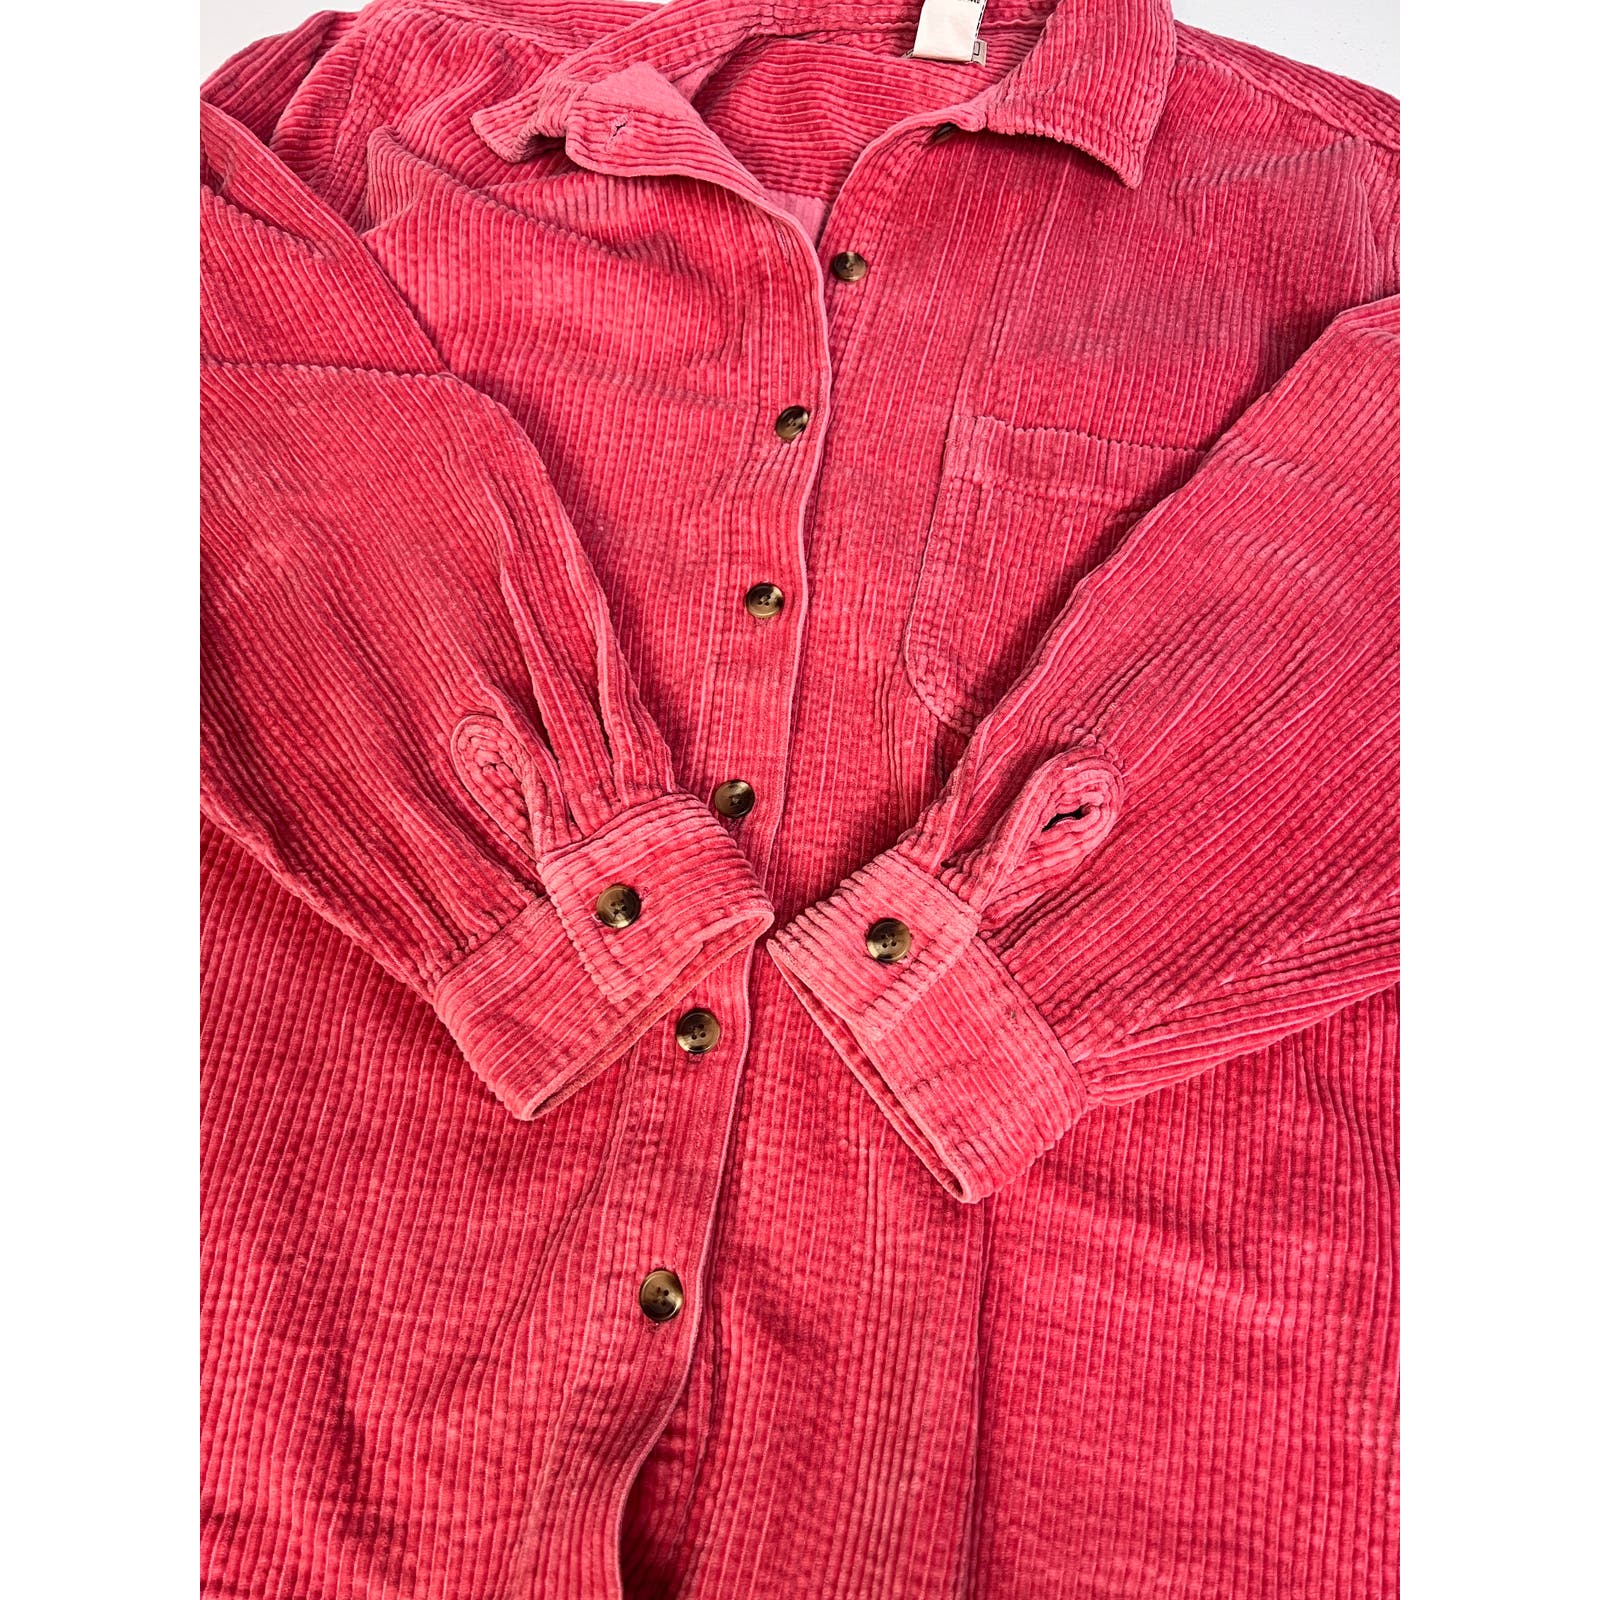 LL Bean Wide Whale Corduroy Shirt Jacket Women’s Large Pink Button Up Cotton